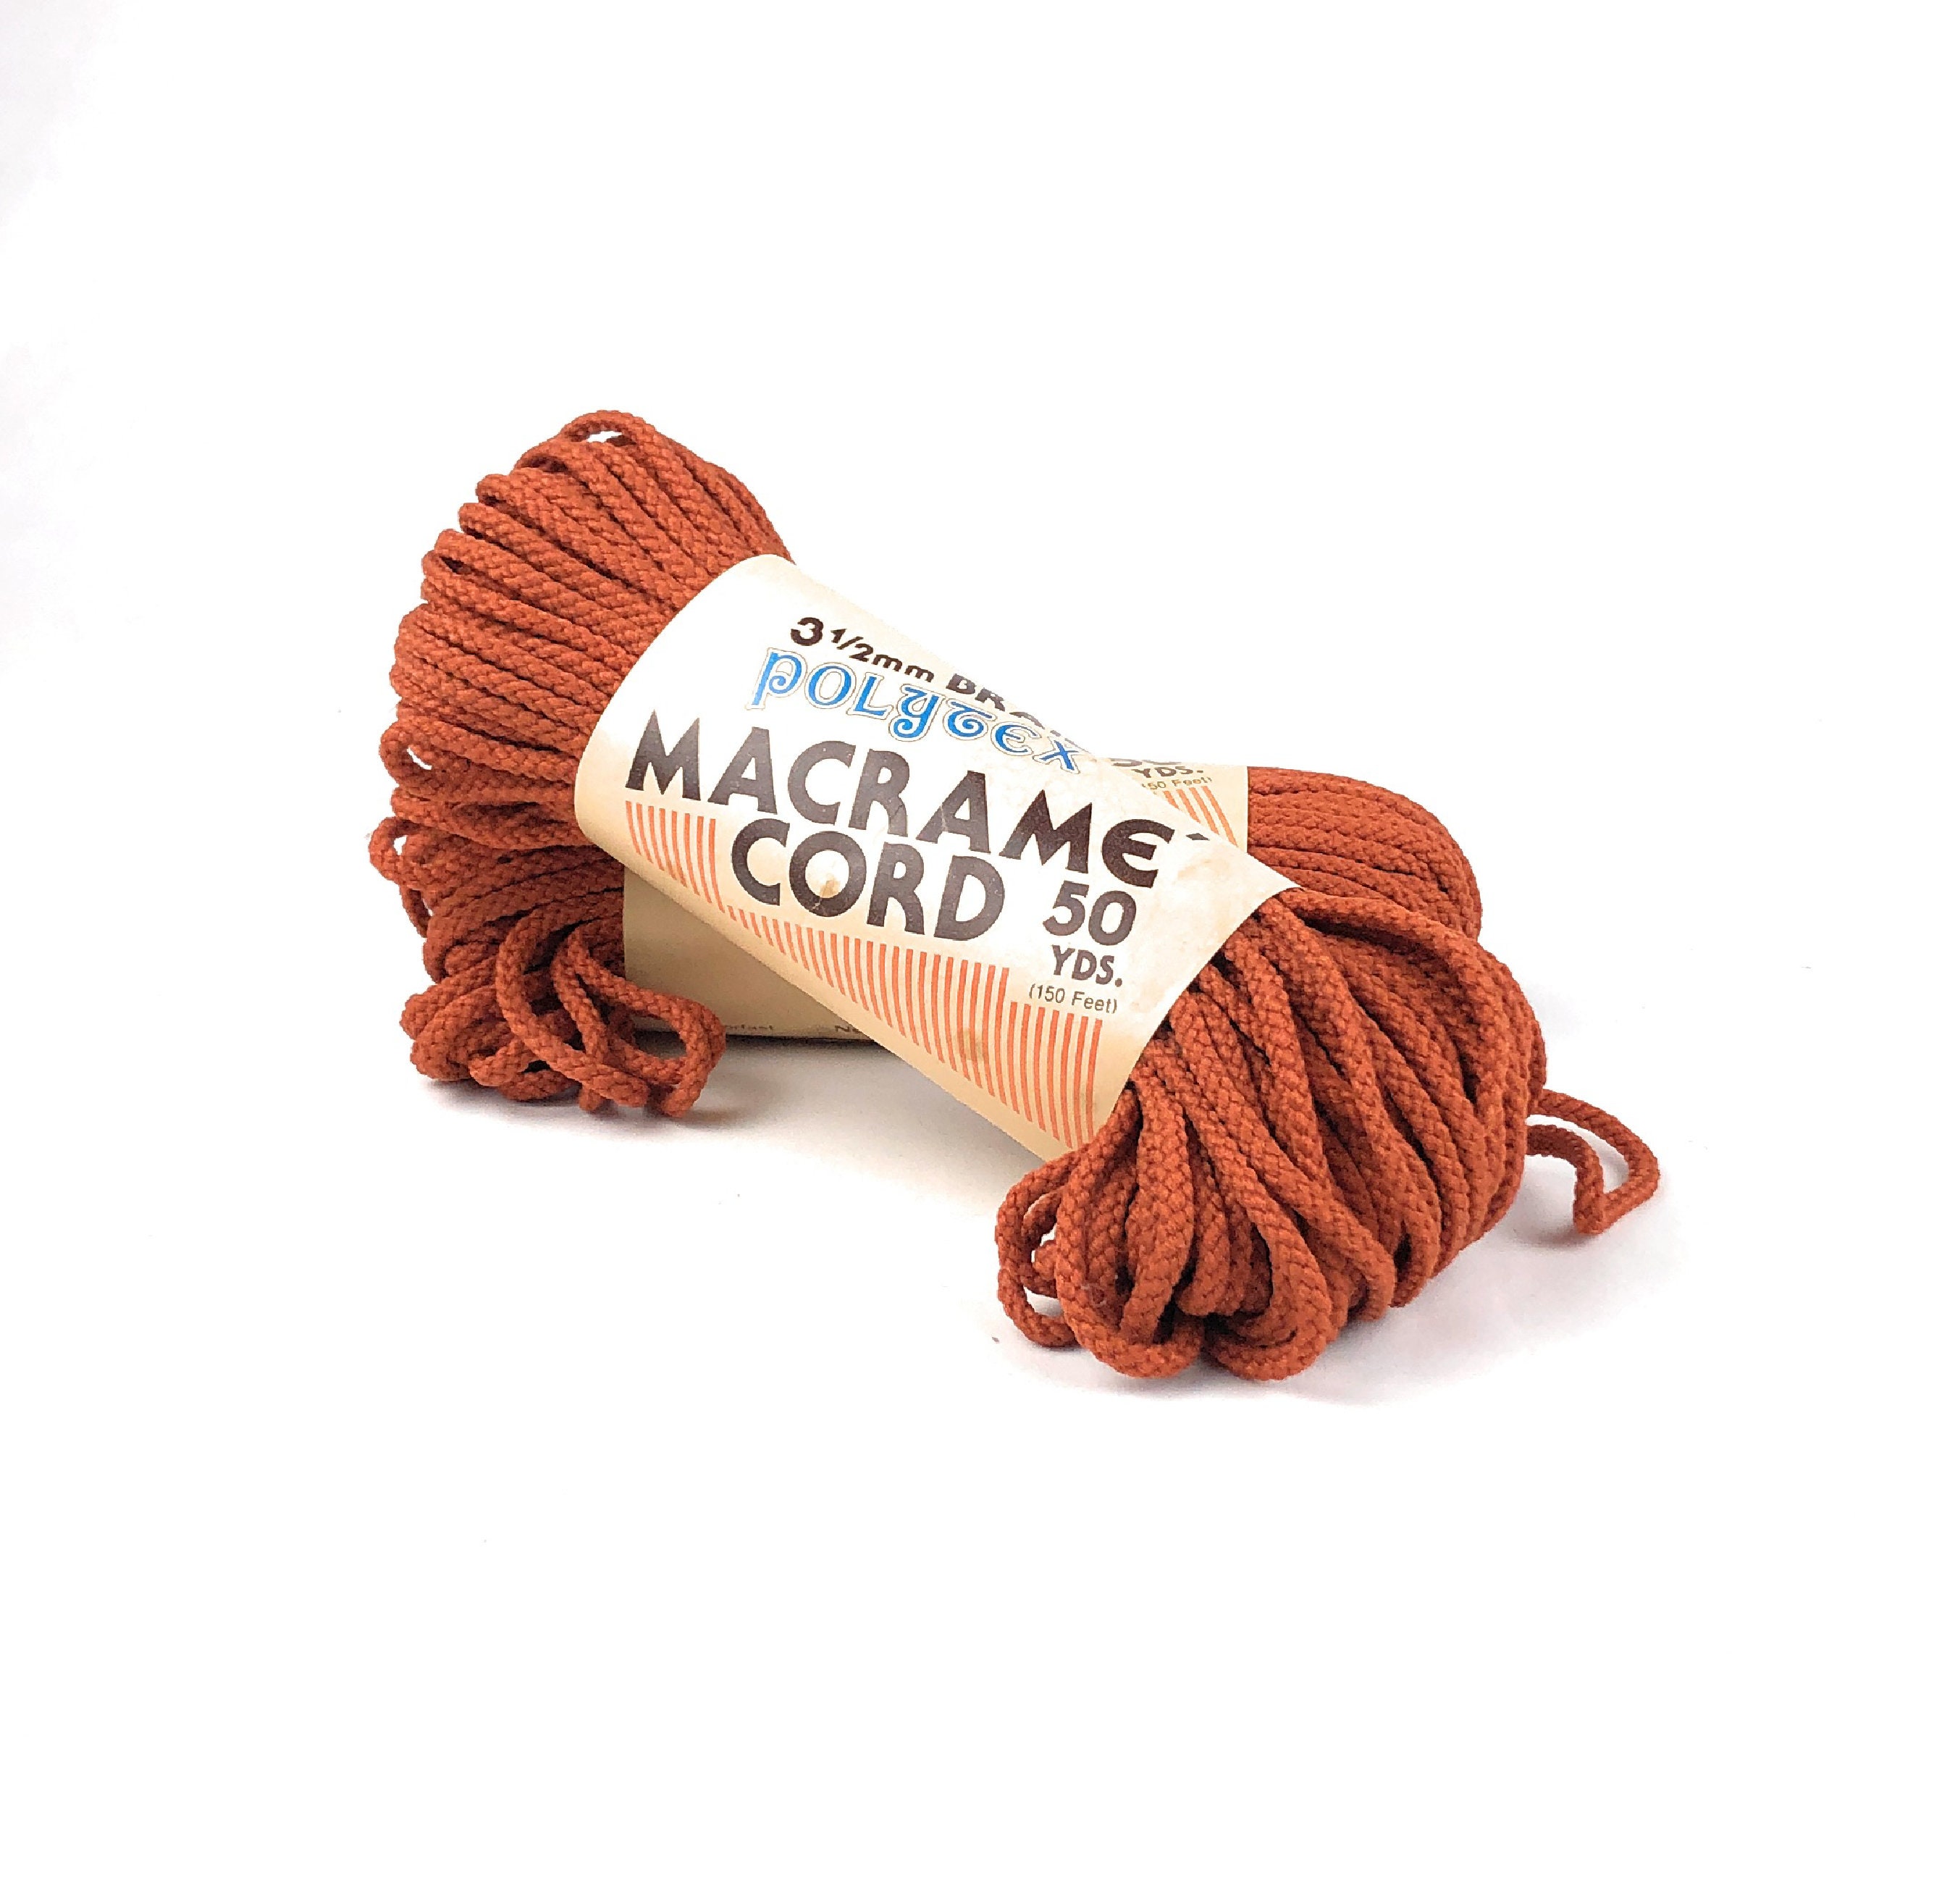 Ravenox Tan Cotton Macramé Cord | Natural Cord for Macramé Projects 5 mm x 500 Yards